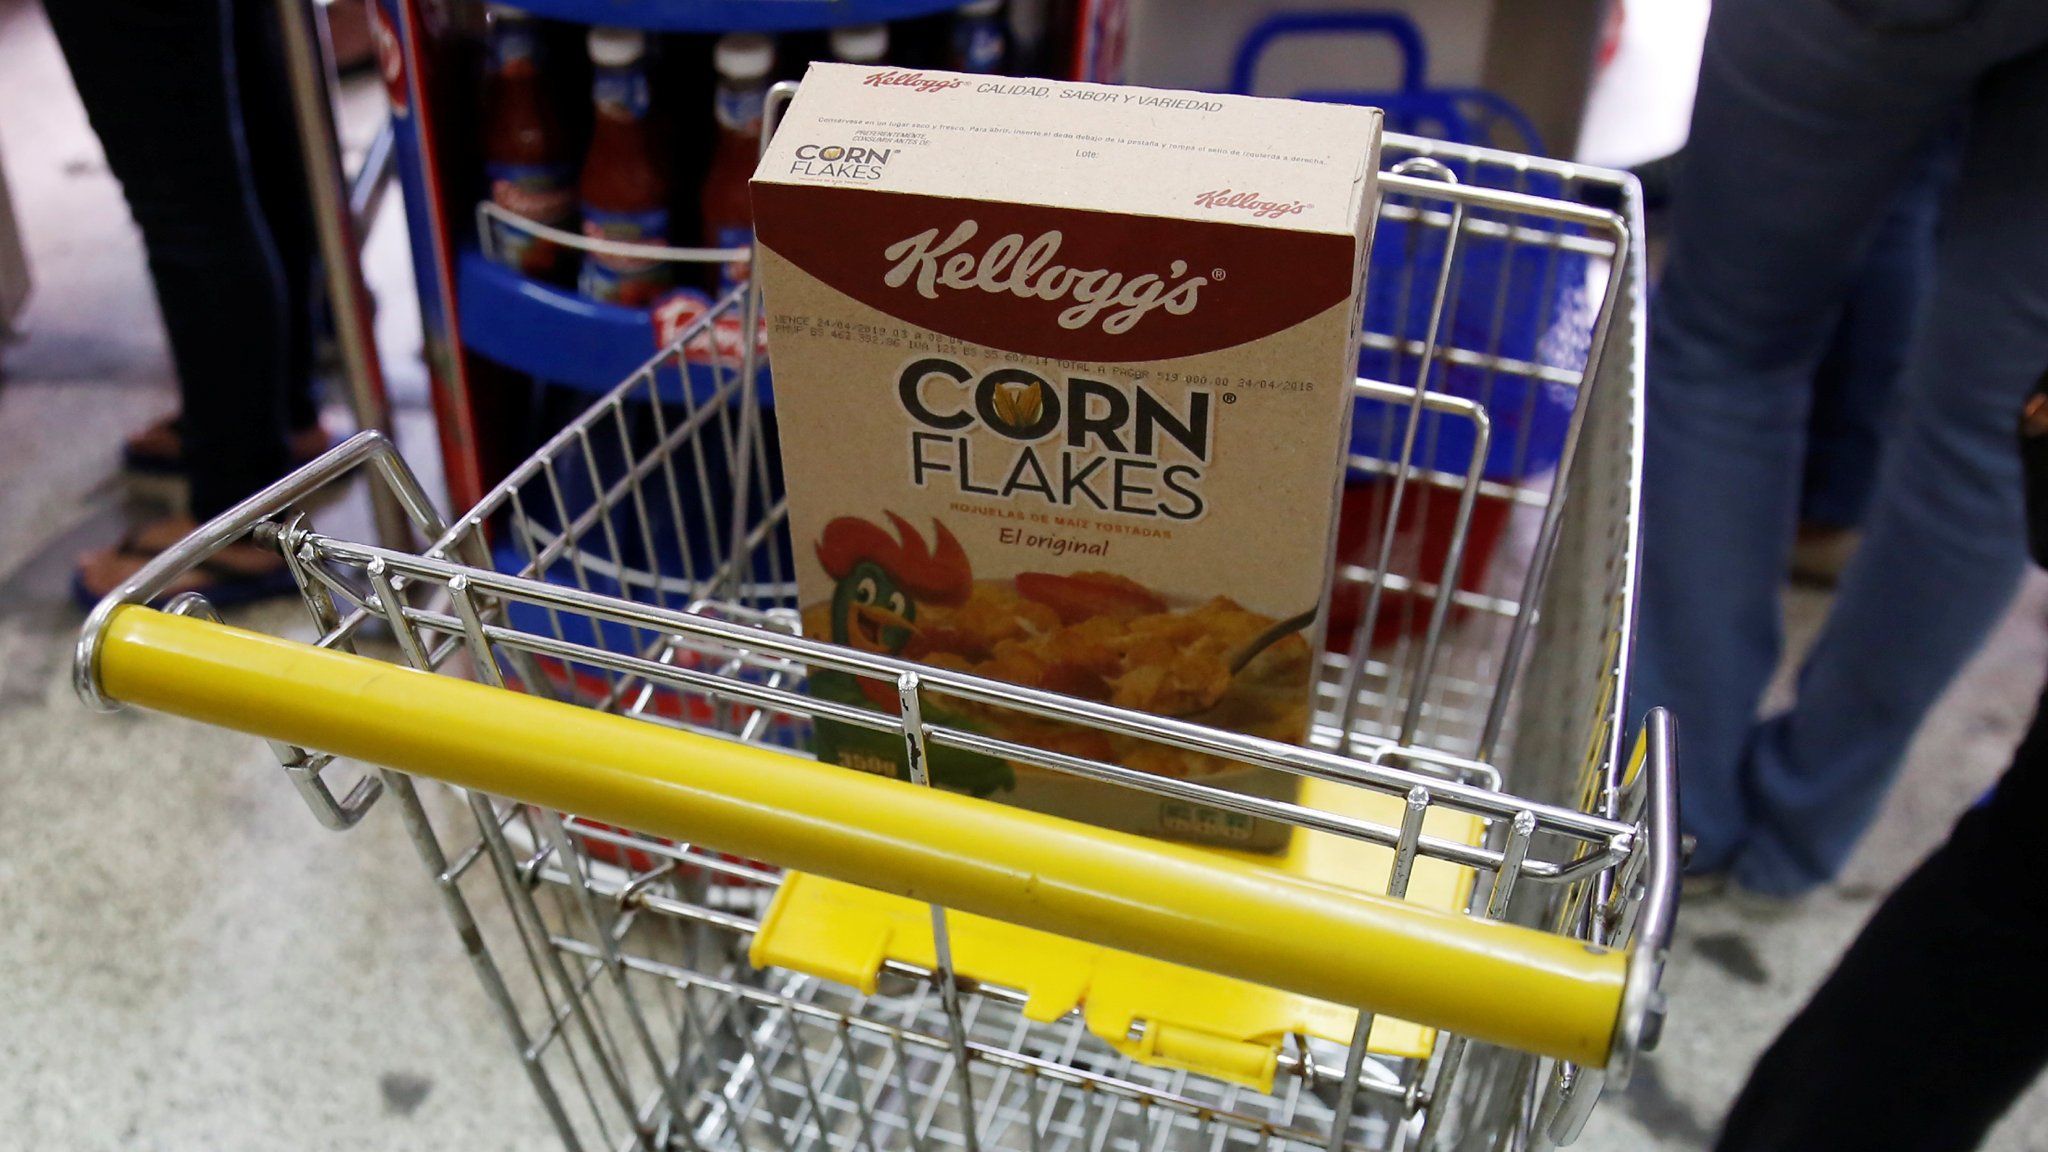 A box of Kellogg's Corn Flakes on a shopping trolley inside a shop in Caracas, Venezuela May 15, 2018